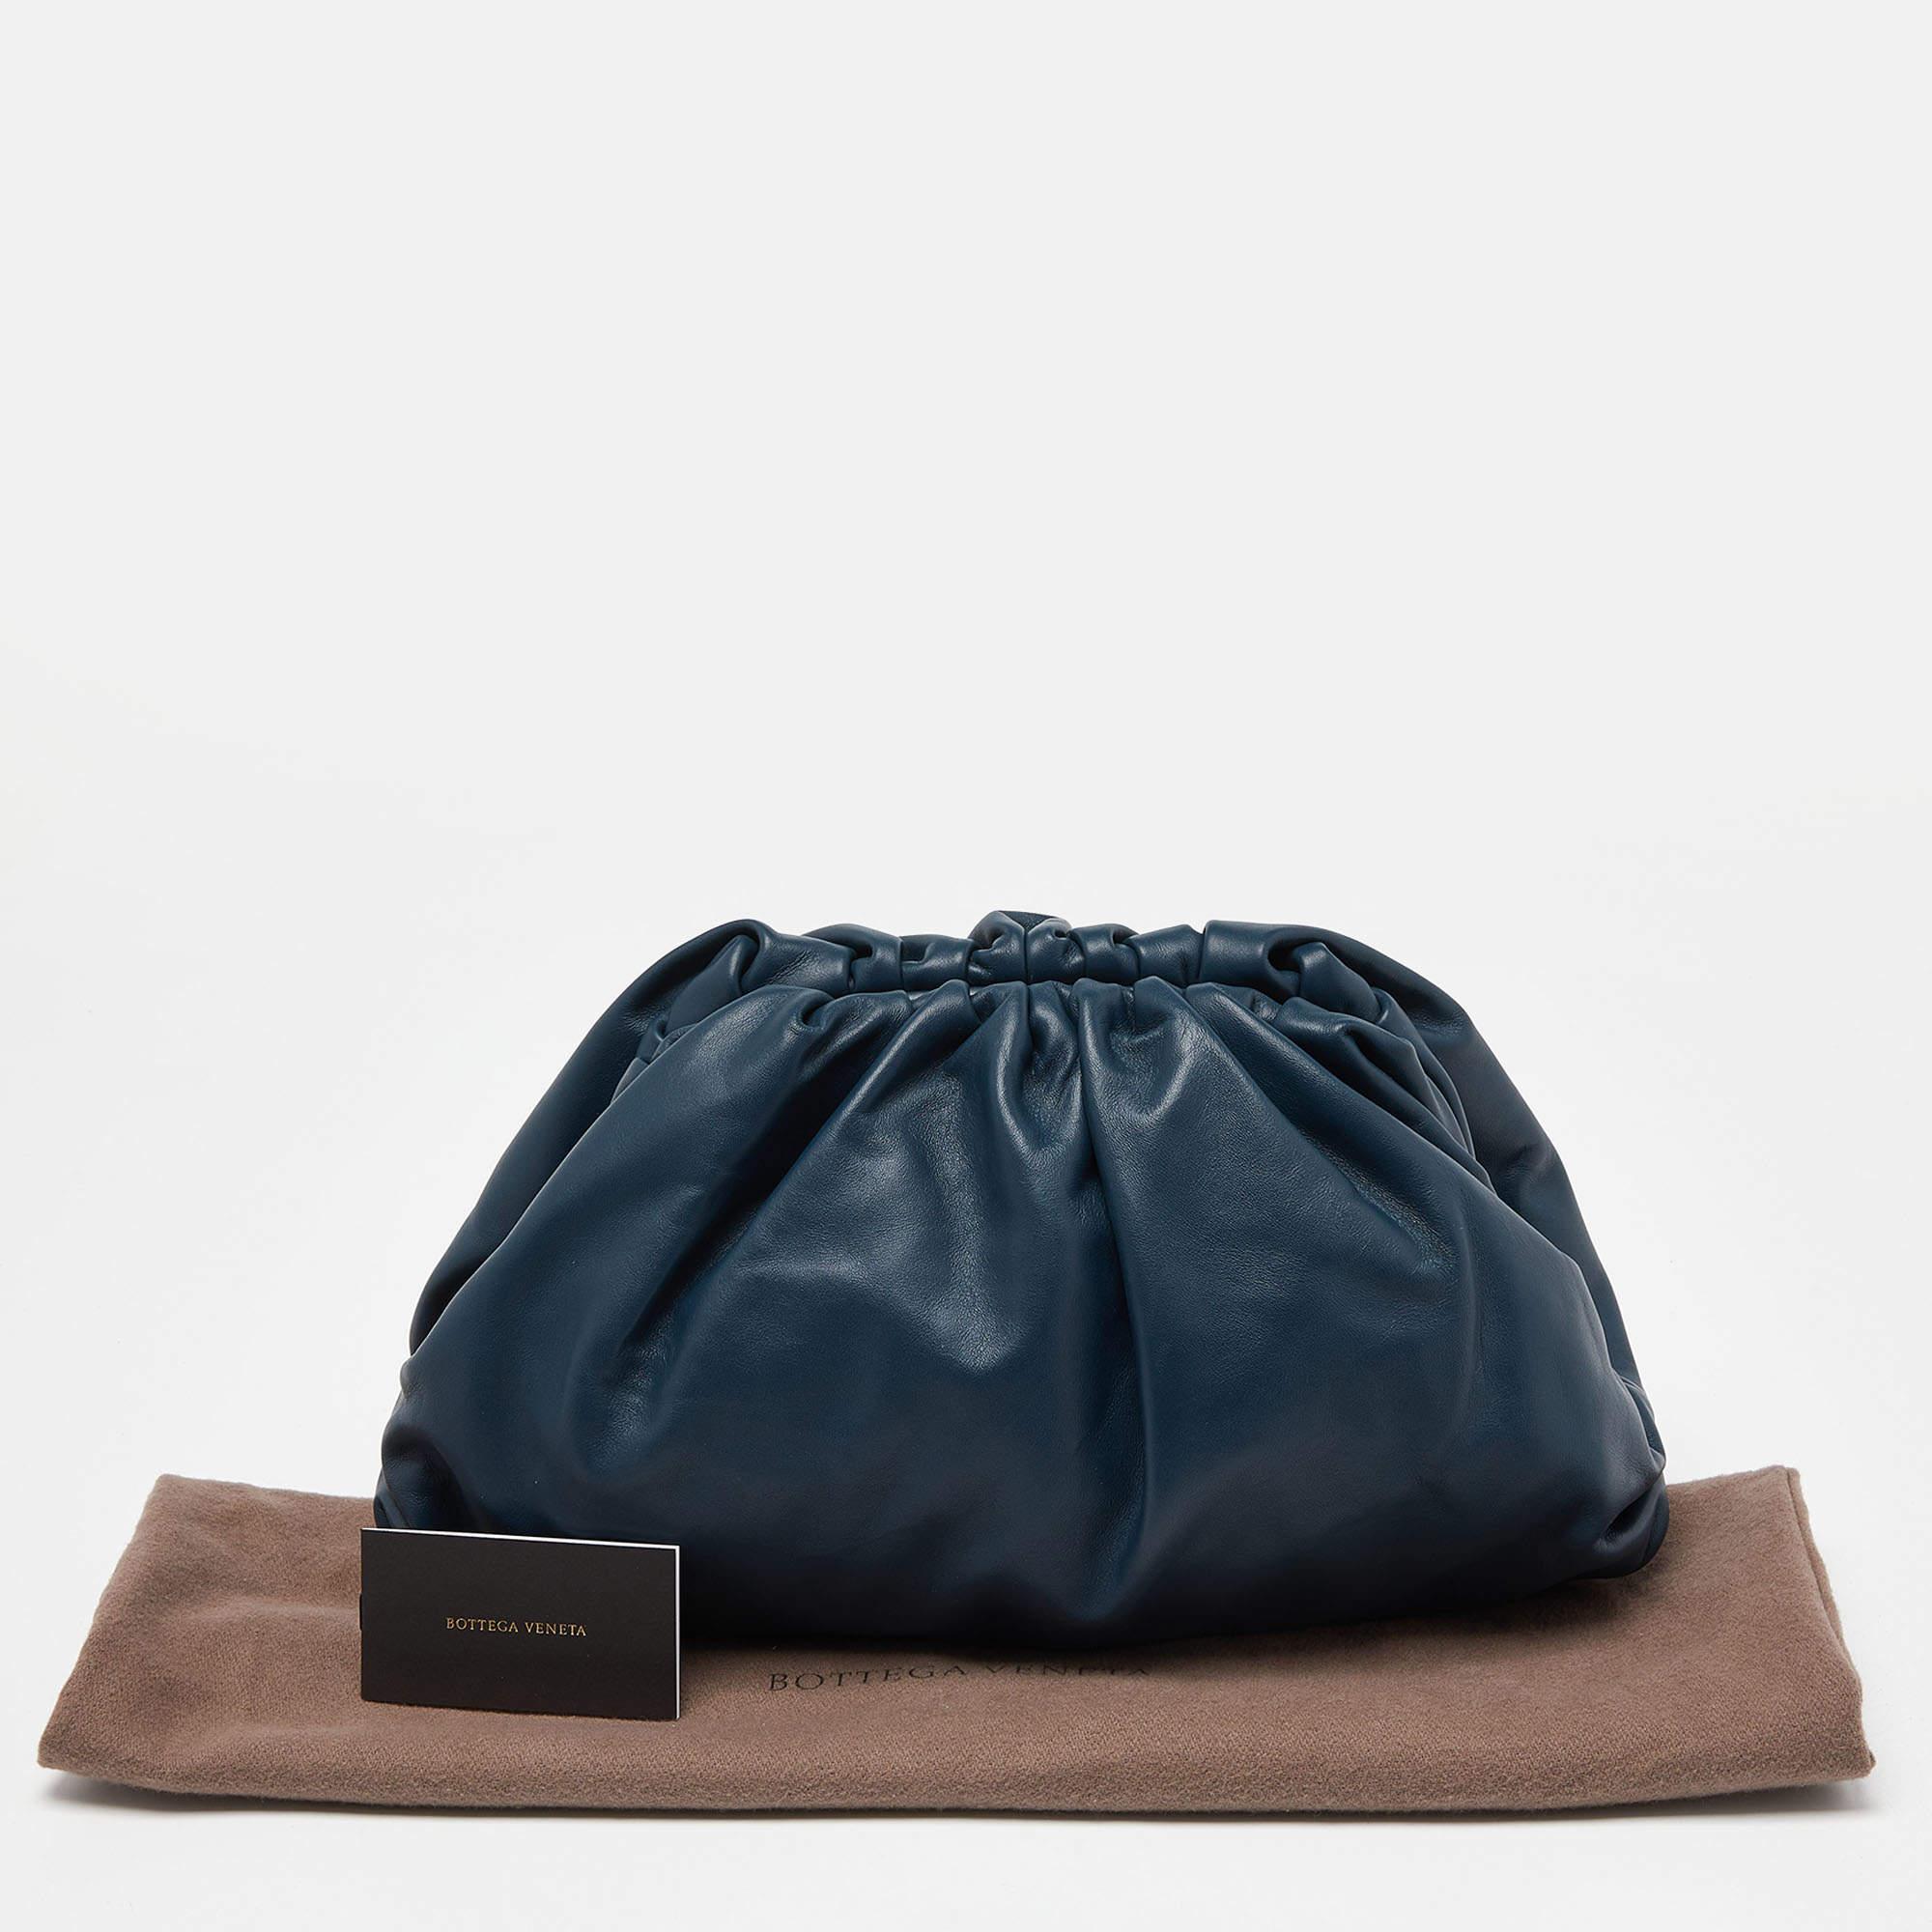 Bottega Veneta Teal Blue Leather The Pouch Clutch For Sale 7